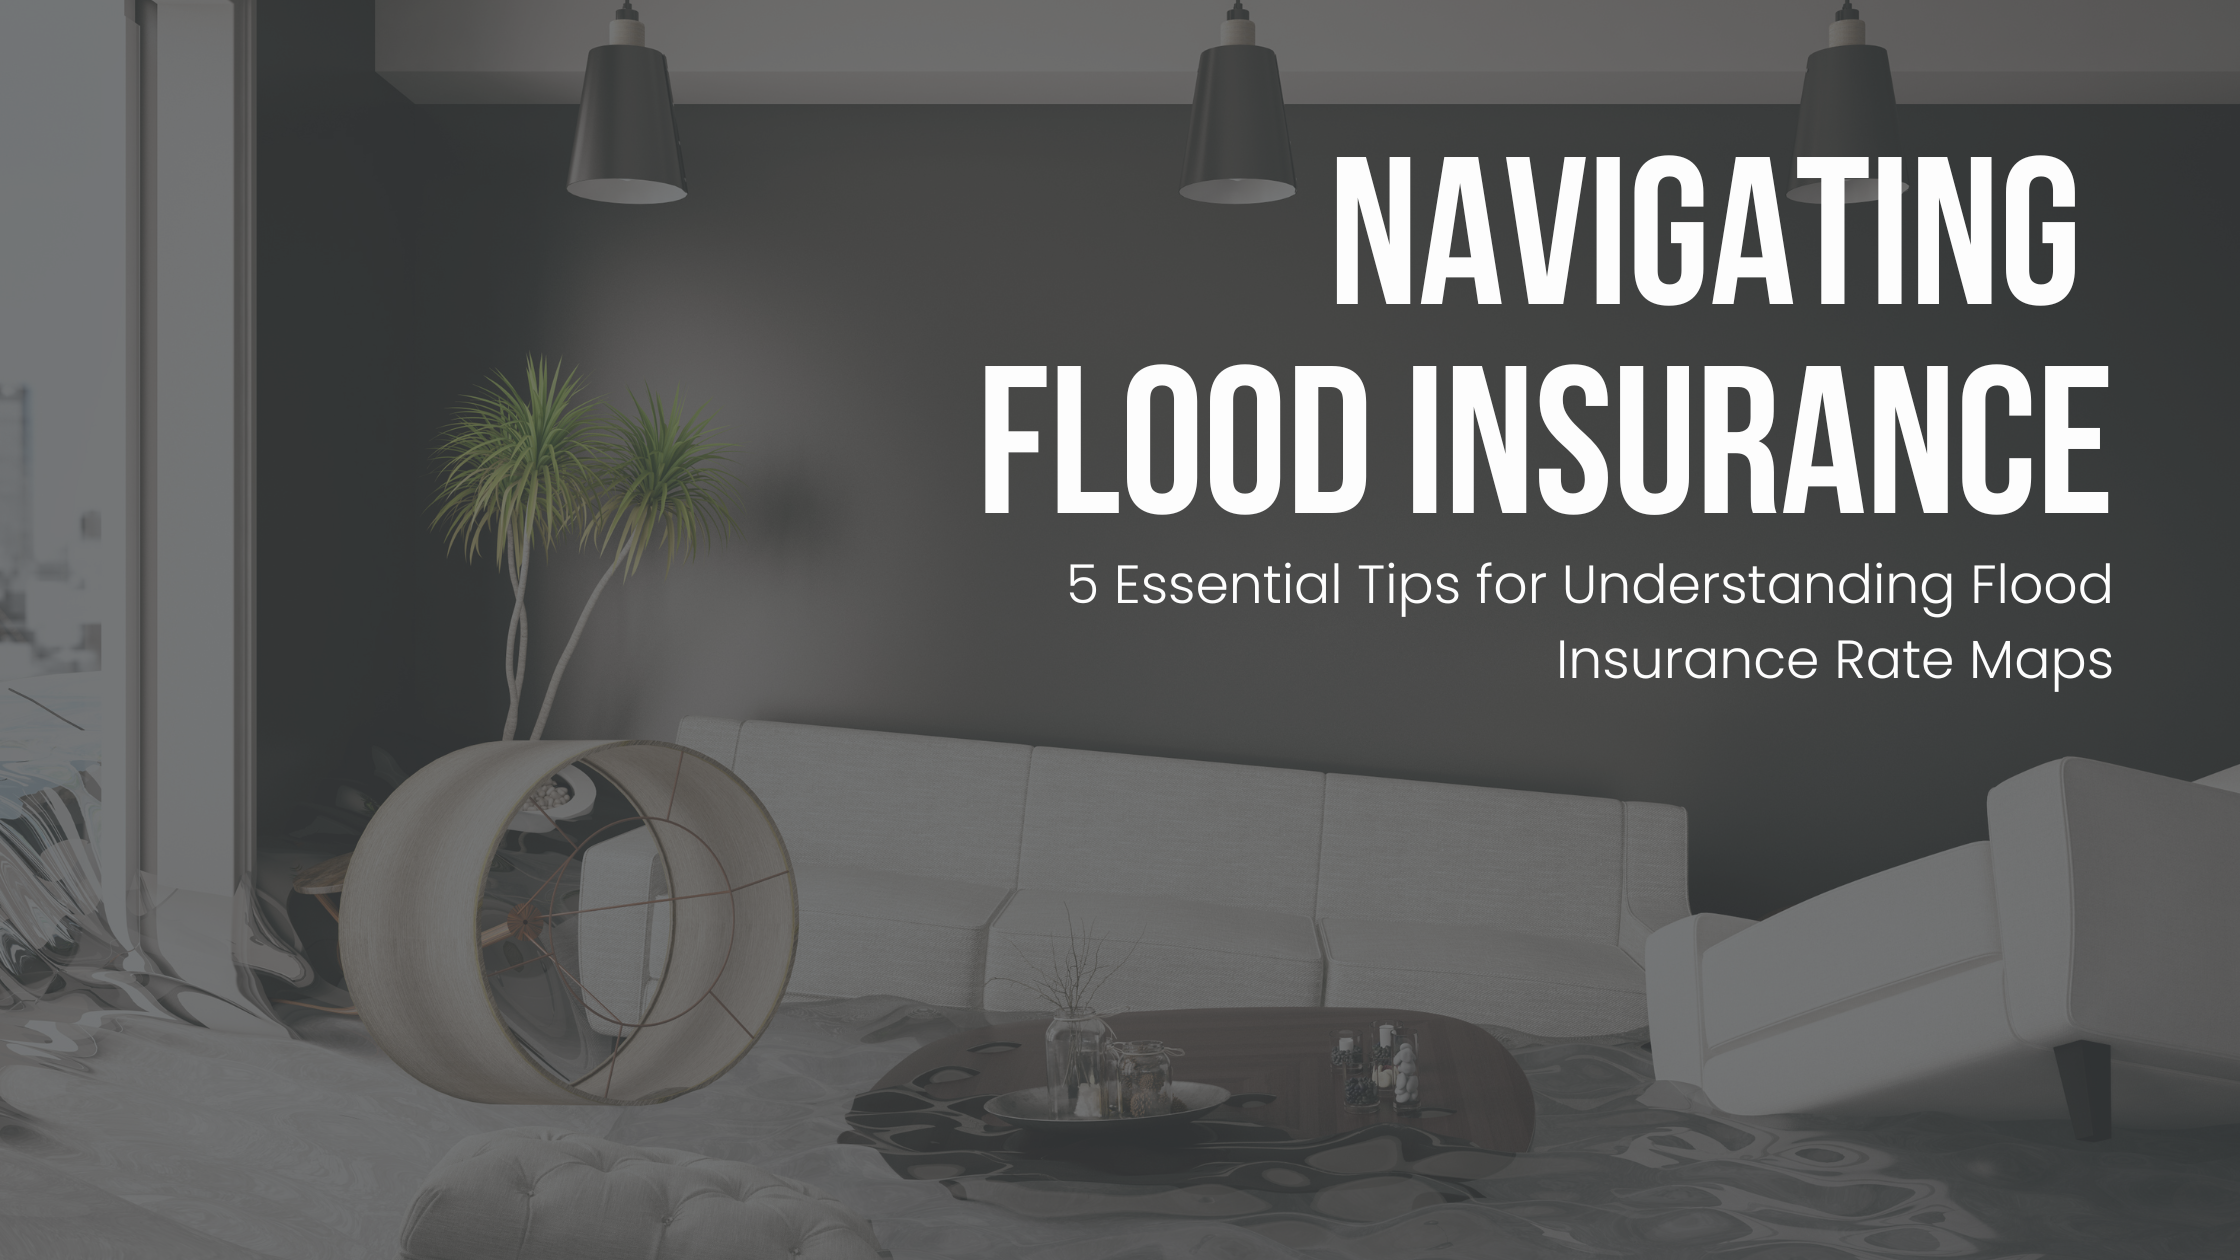 Navigating Flood Insurance: 5 Essential Tips for Understanding Flood Insurance Rate Maps